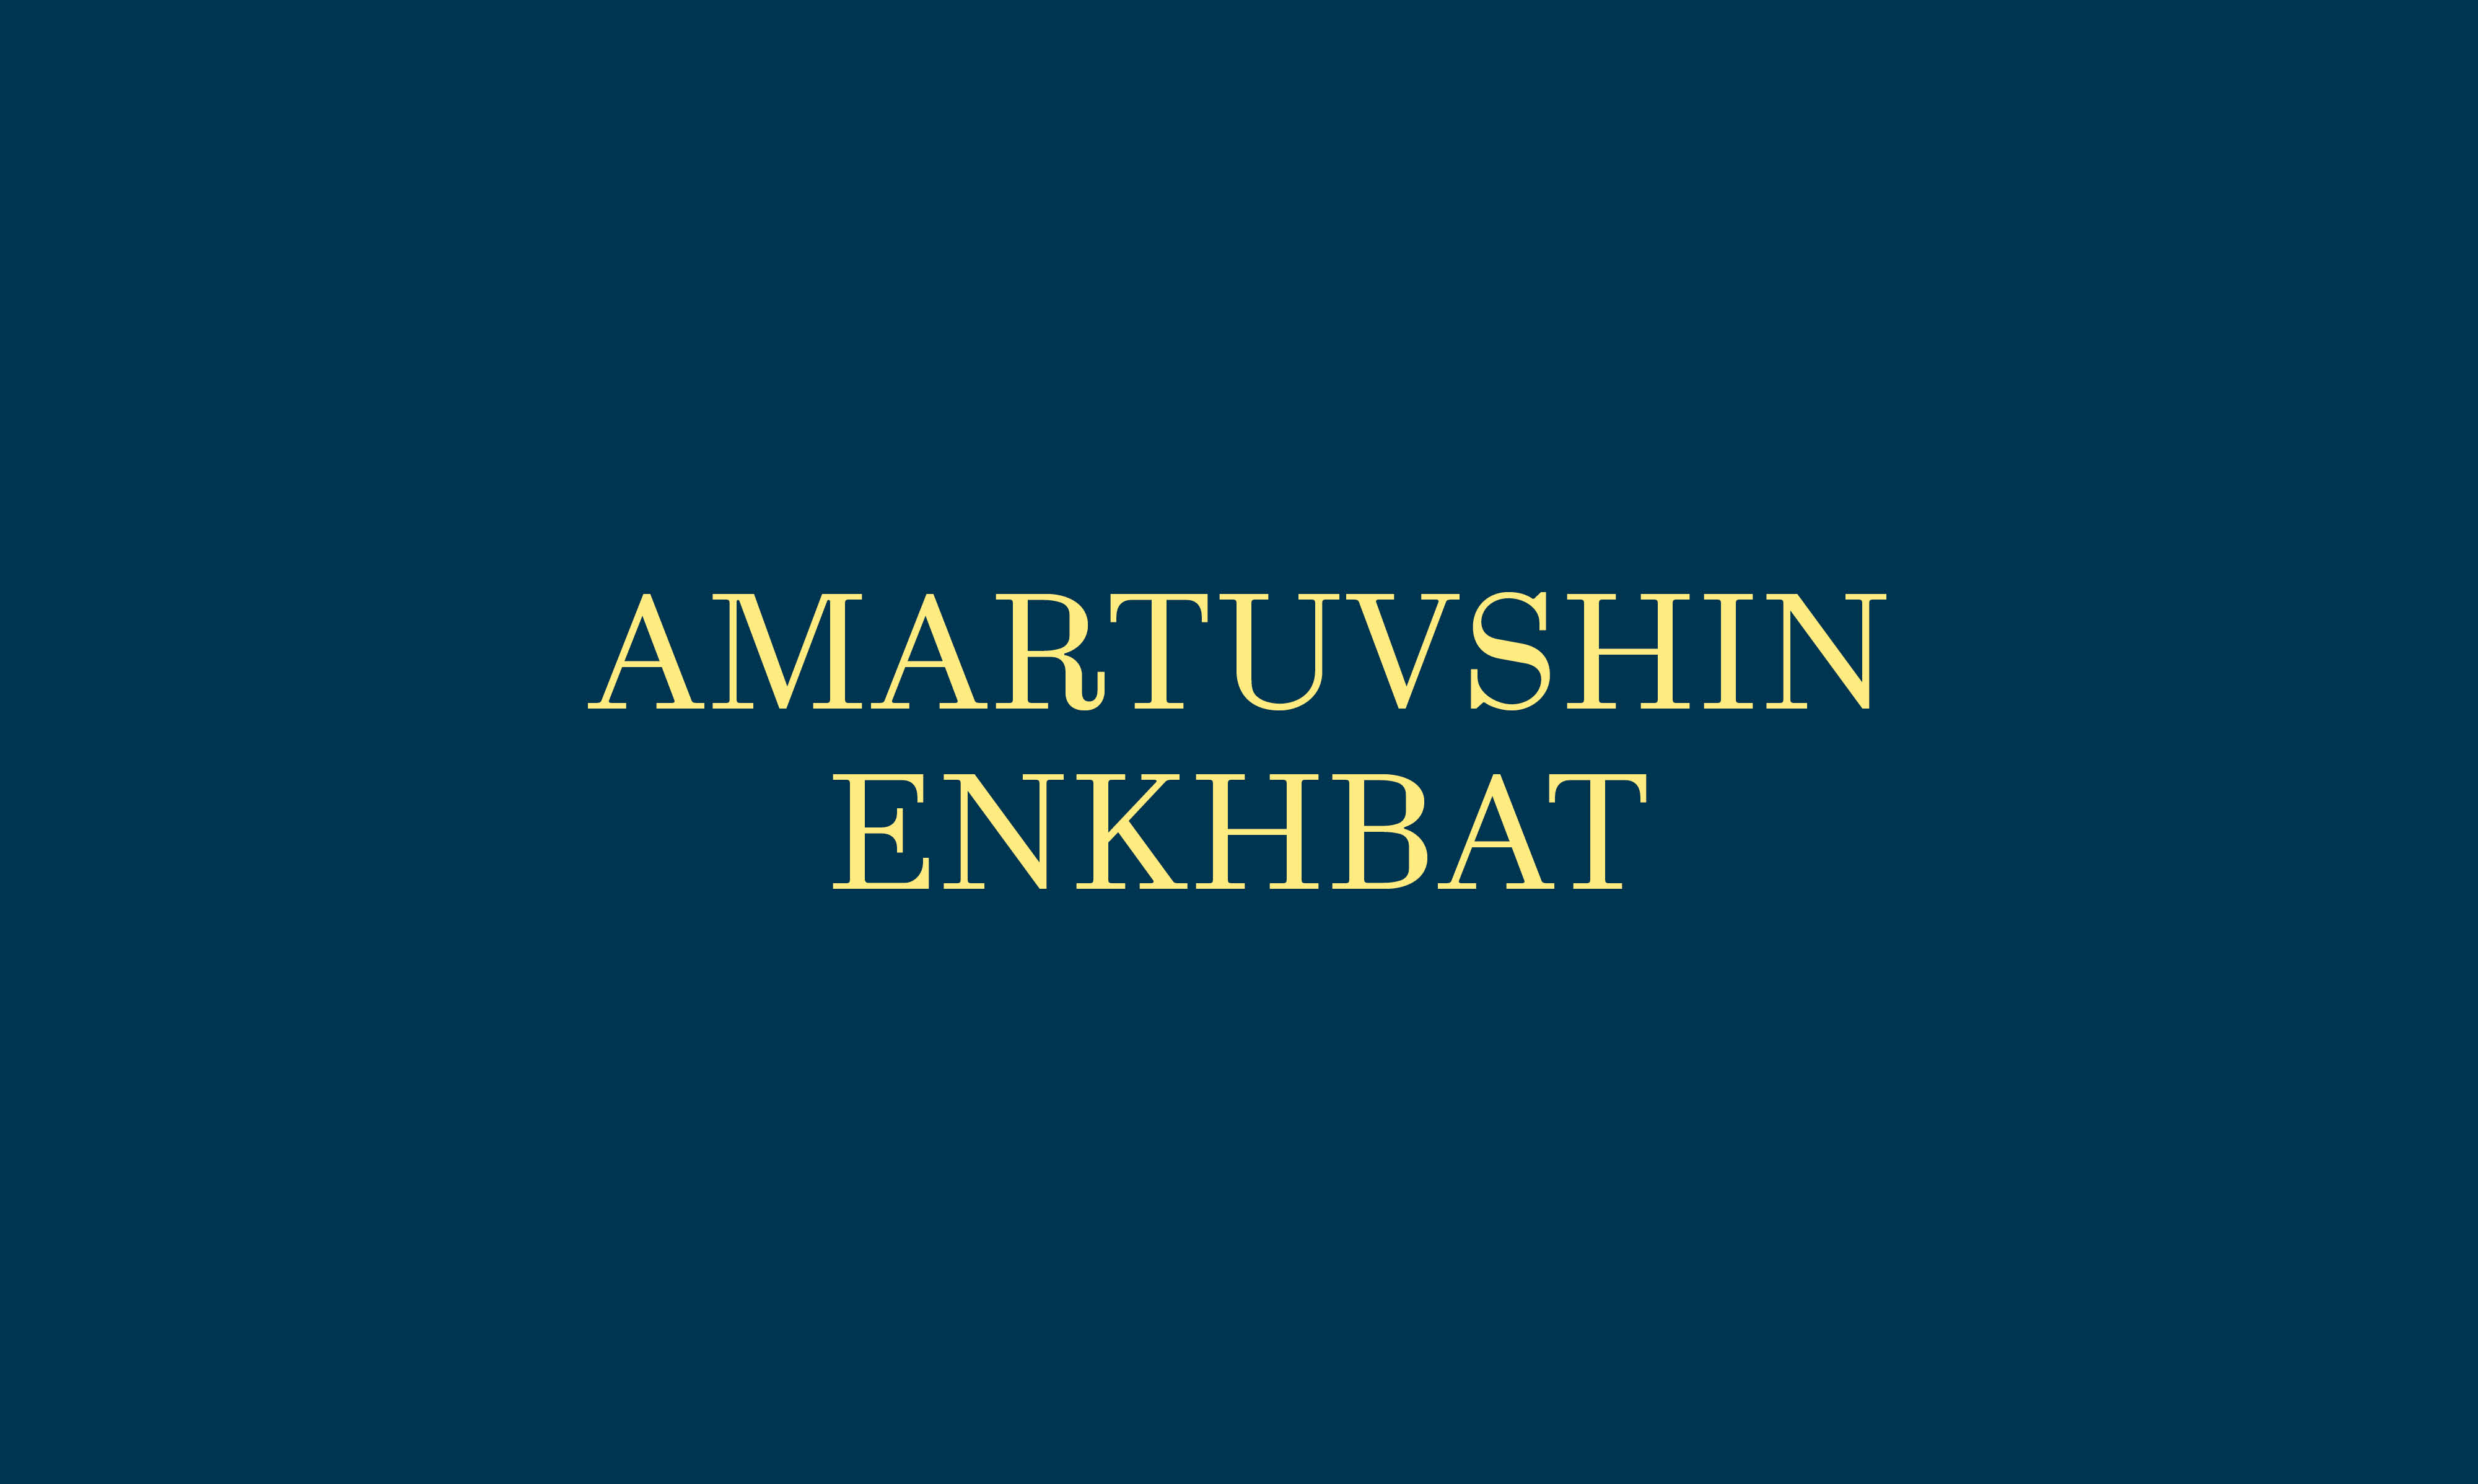 AMARTUVSHIN ENKHBAT